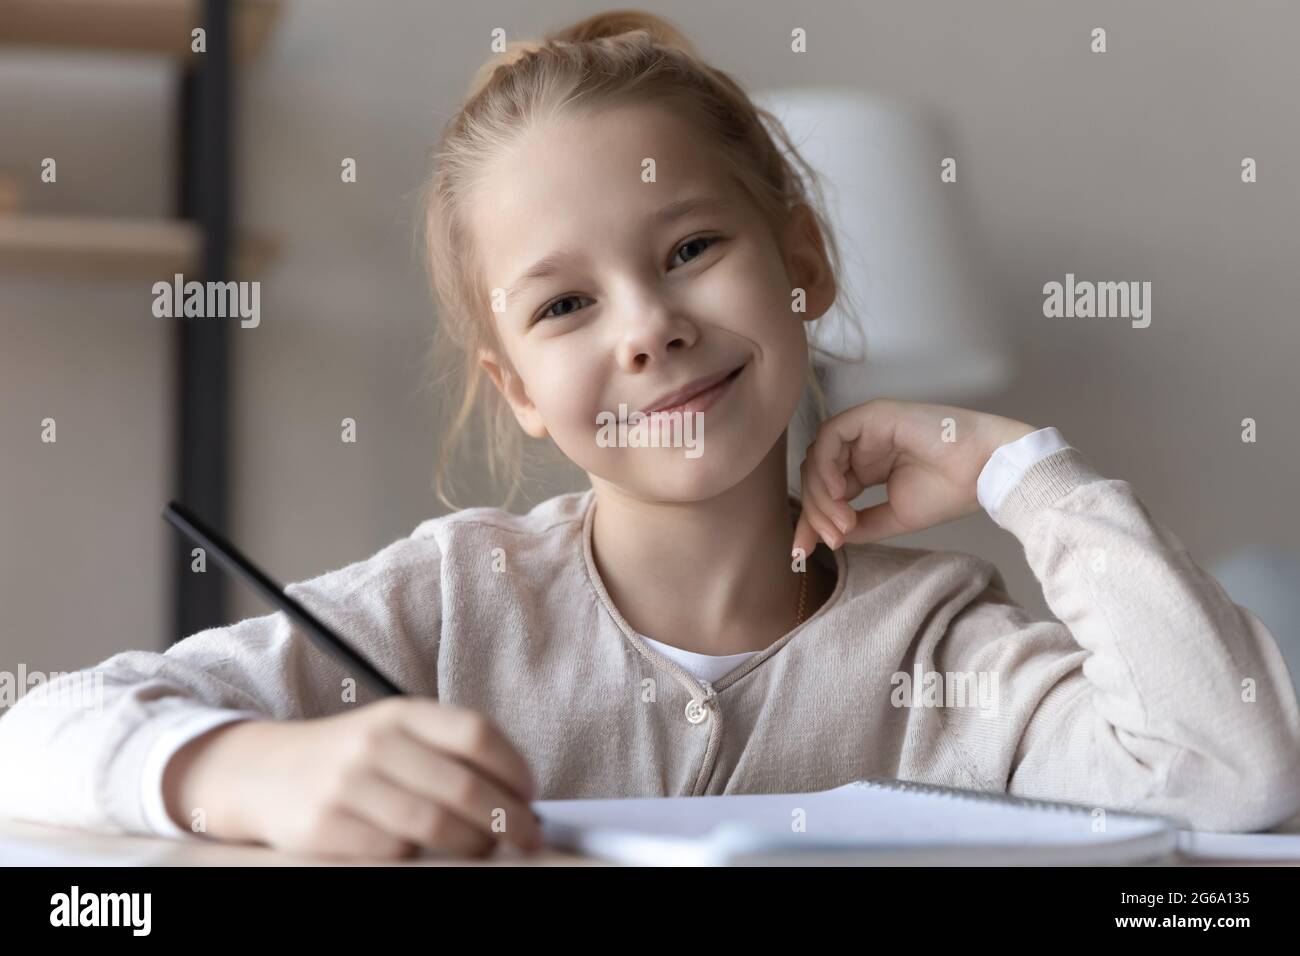 Headshot portrait smiling girl elementary school age pupil at desk Stock Photo